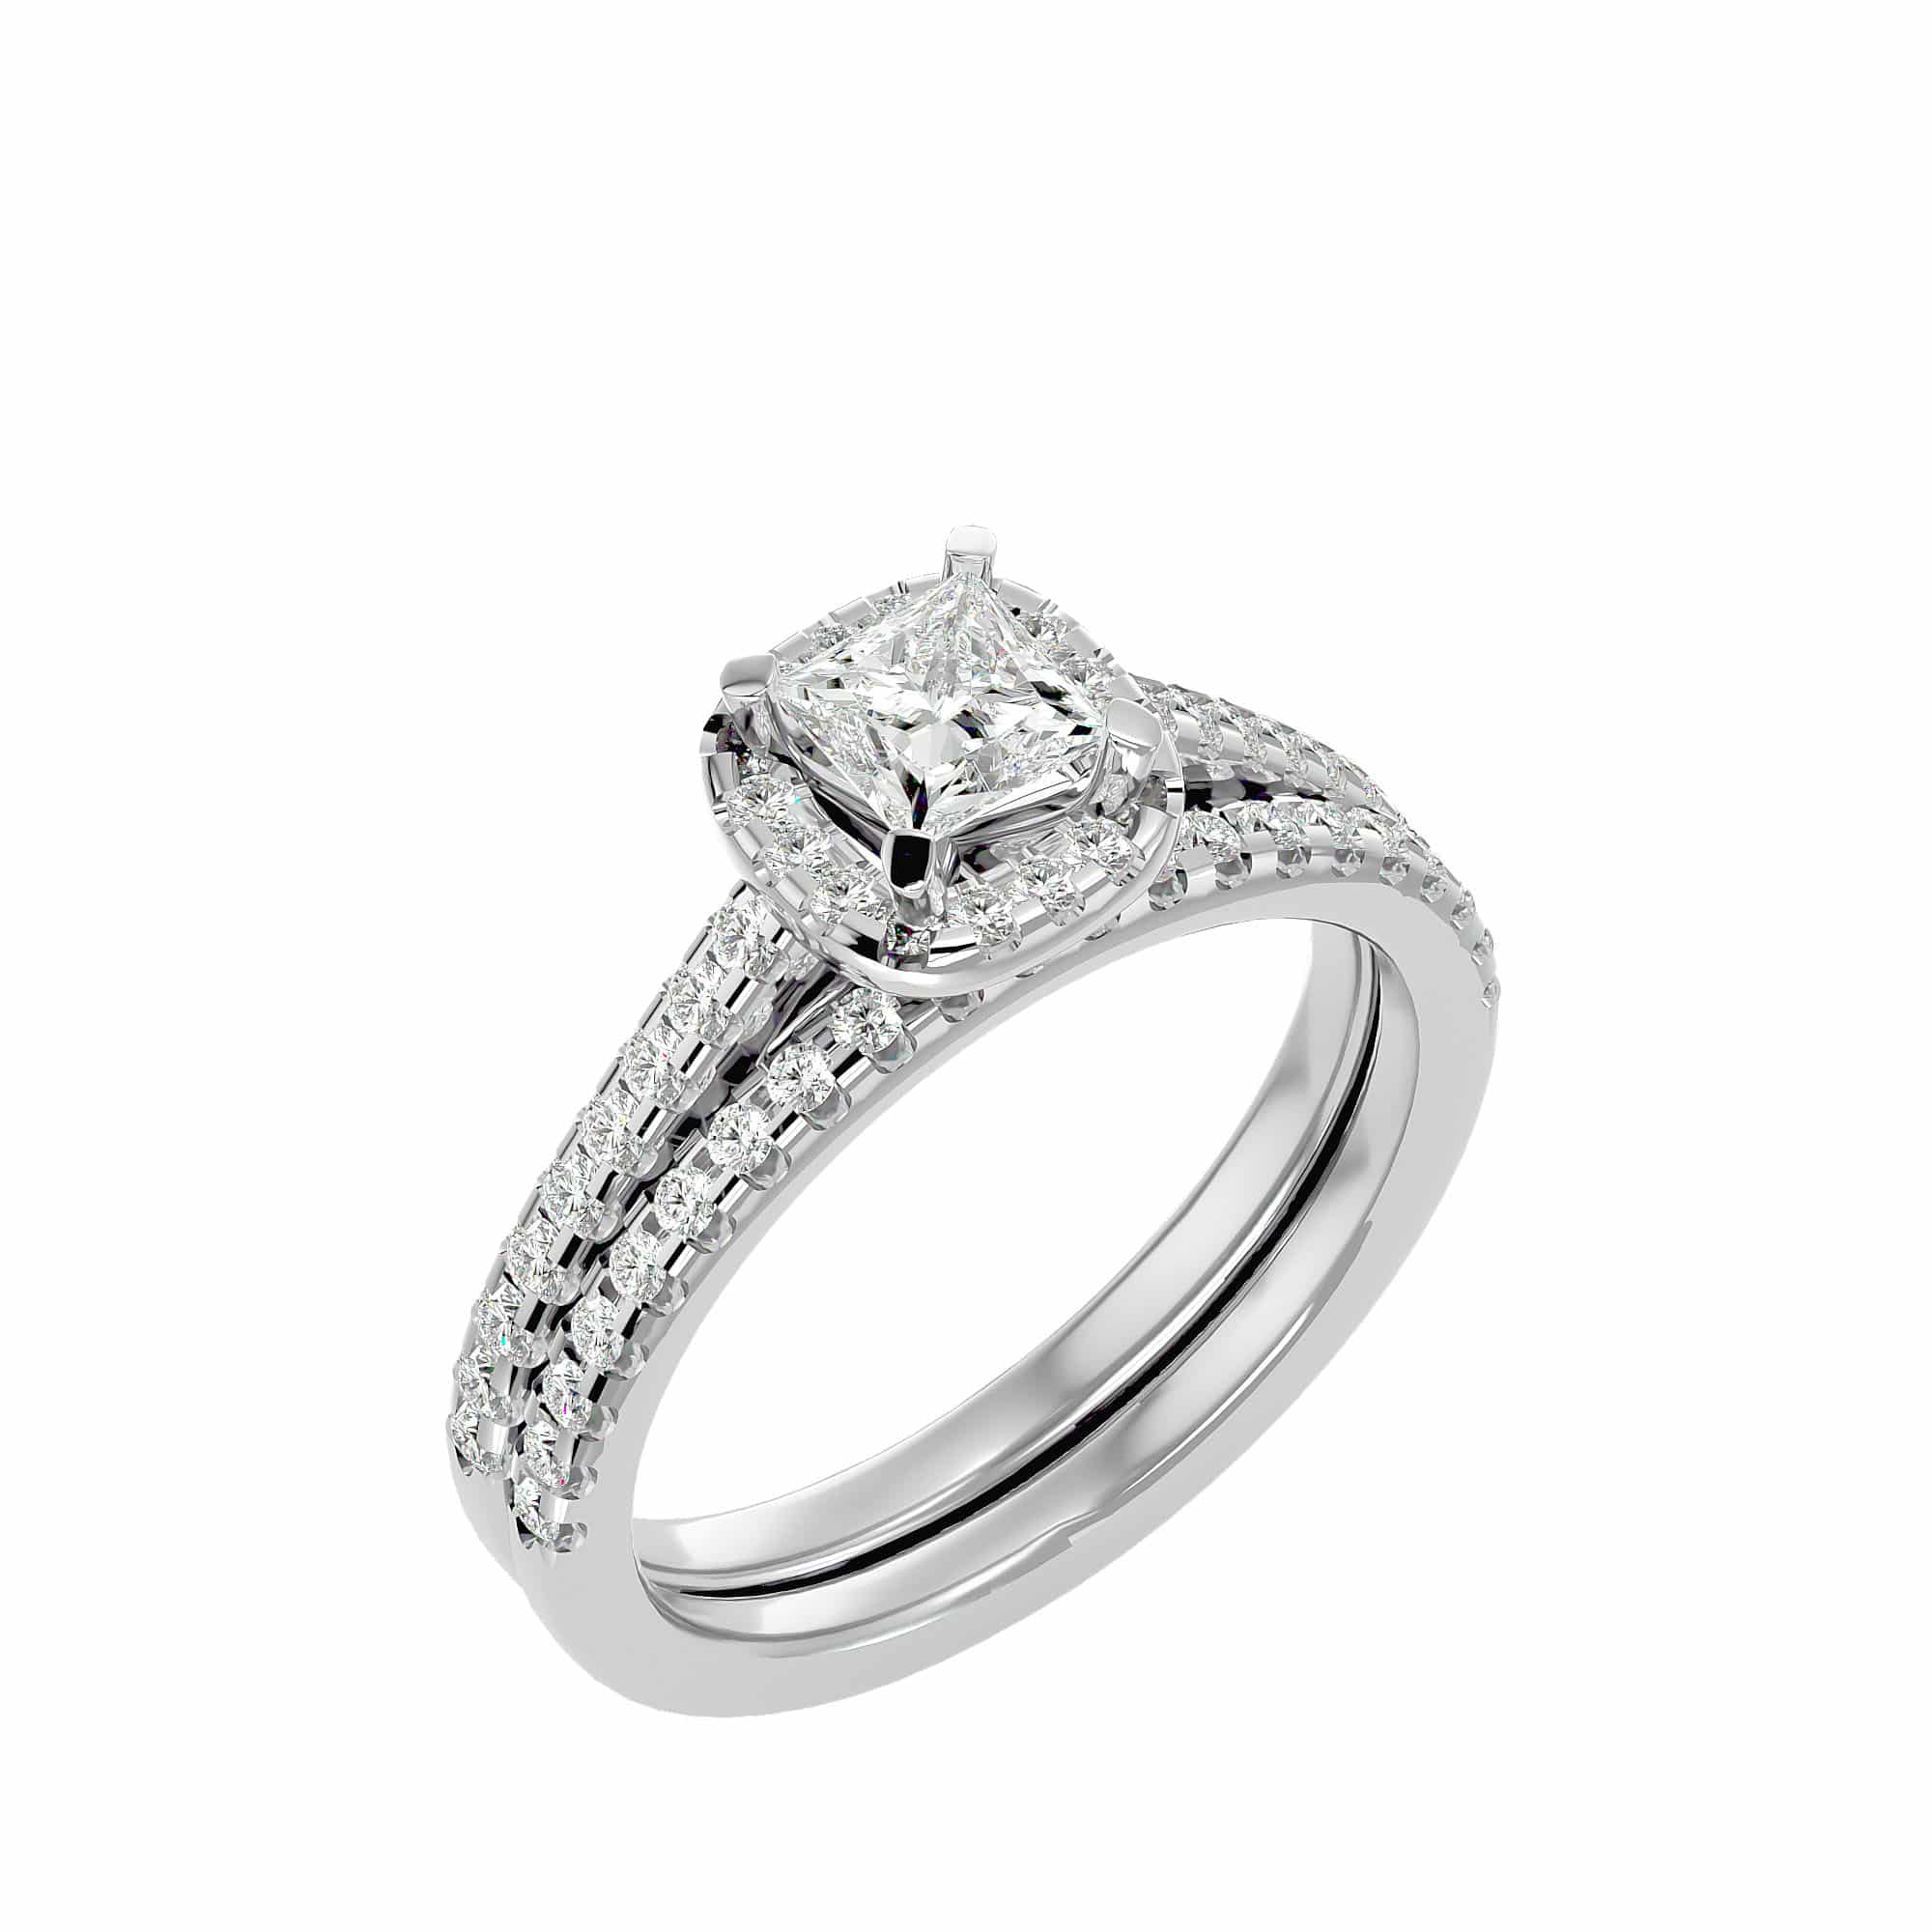 Princess Cut Halo Engagement Ring With Matching Wedding Band